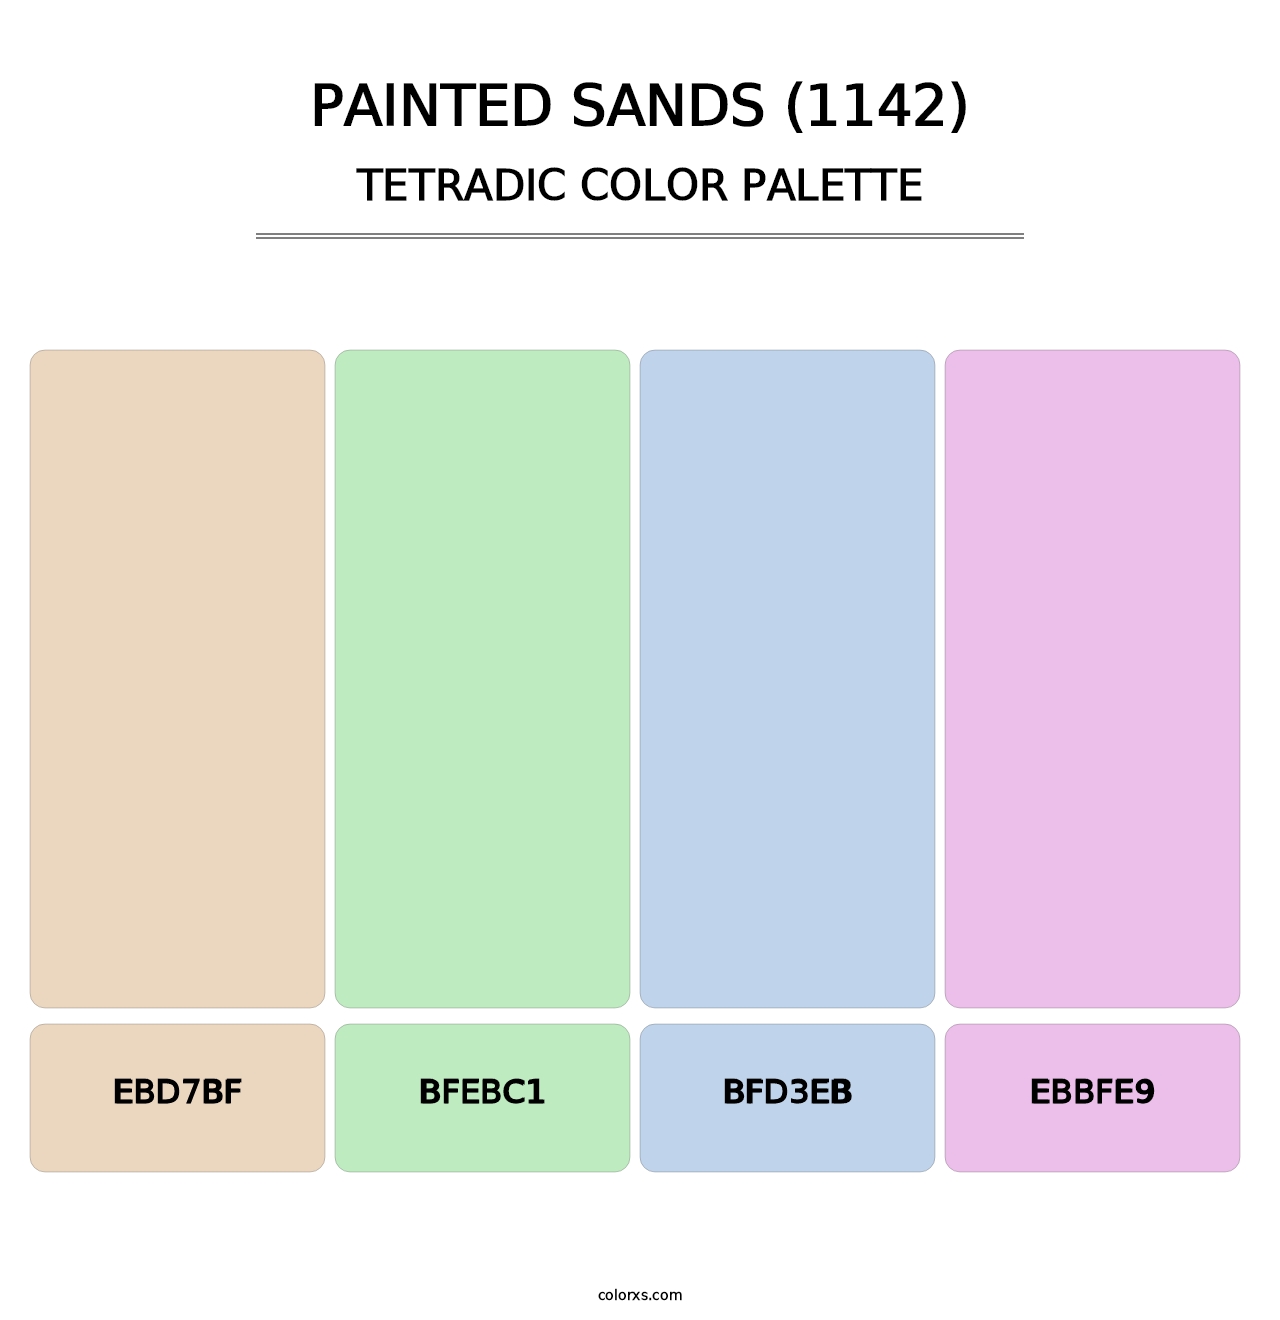 Painted Sands (1142) - Tetradic Color Palette